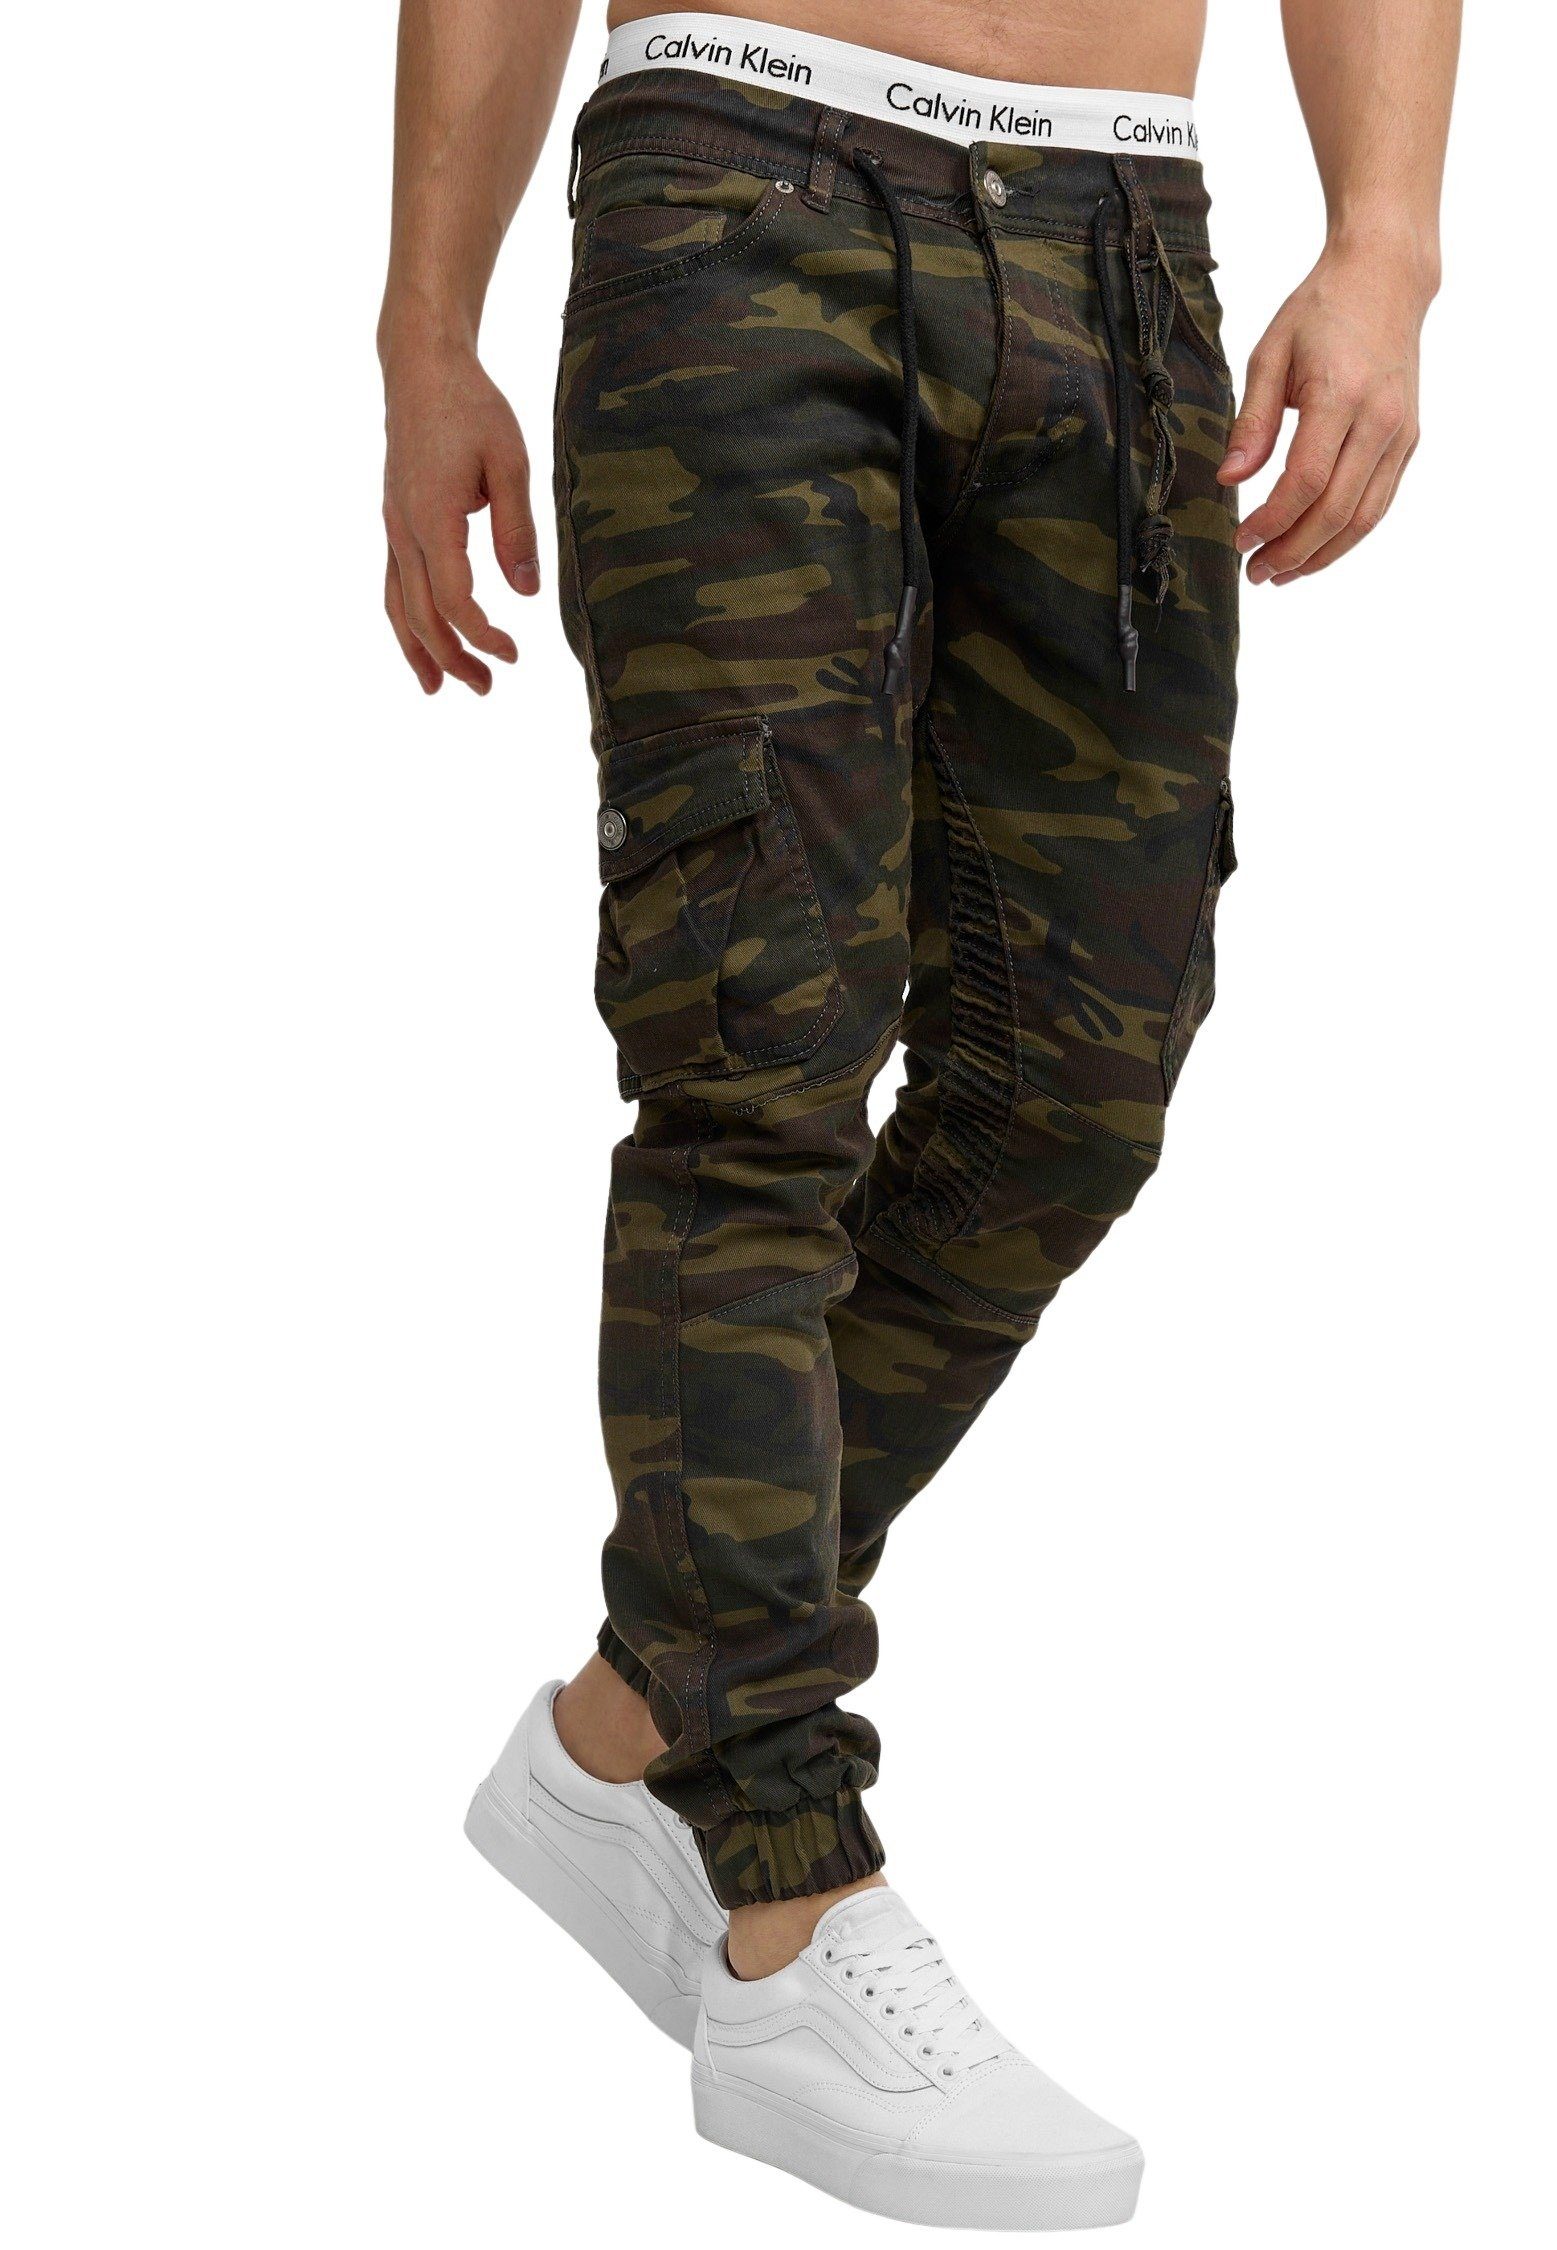 Code47 Slim-fit-Jeans Herren Chino Hose Jeans Designer Chinohose Slim Fit Männer Slim 3207C Oliv Camouflage